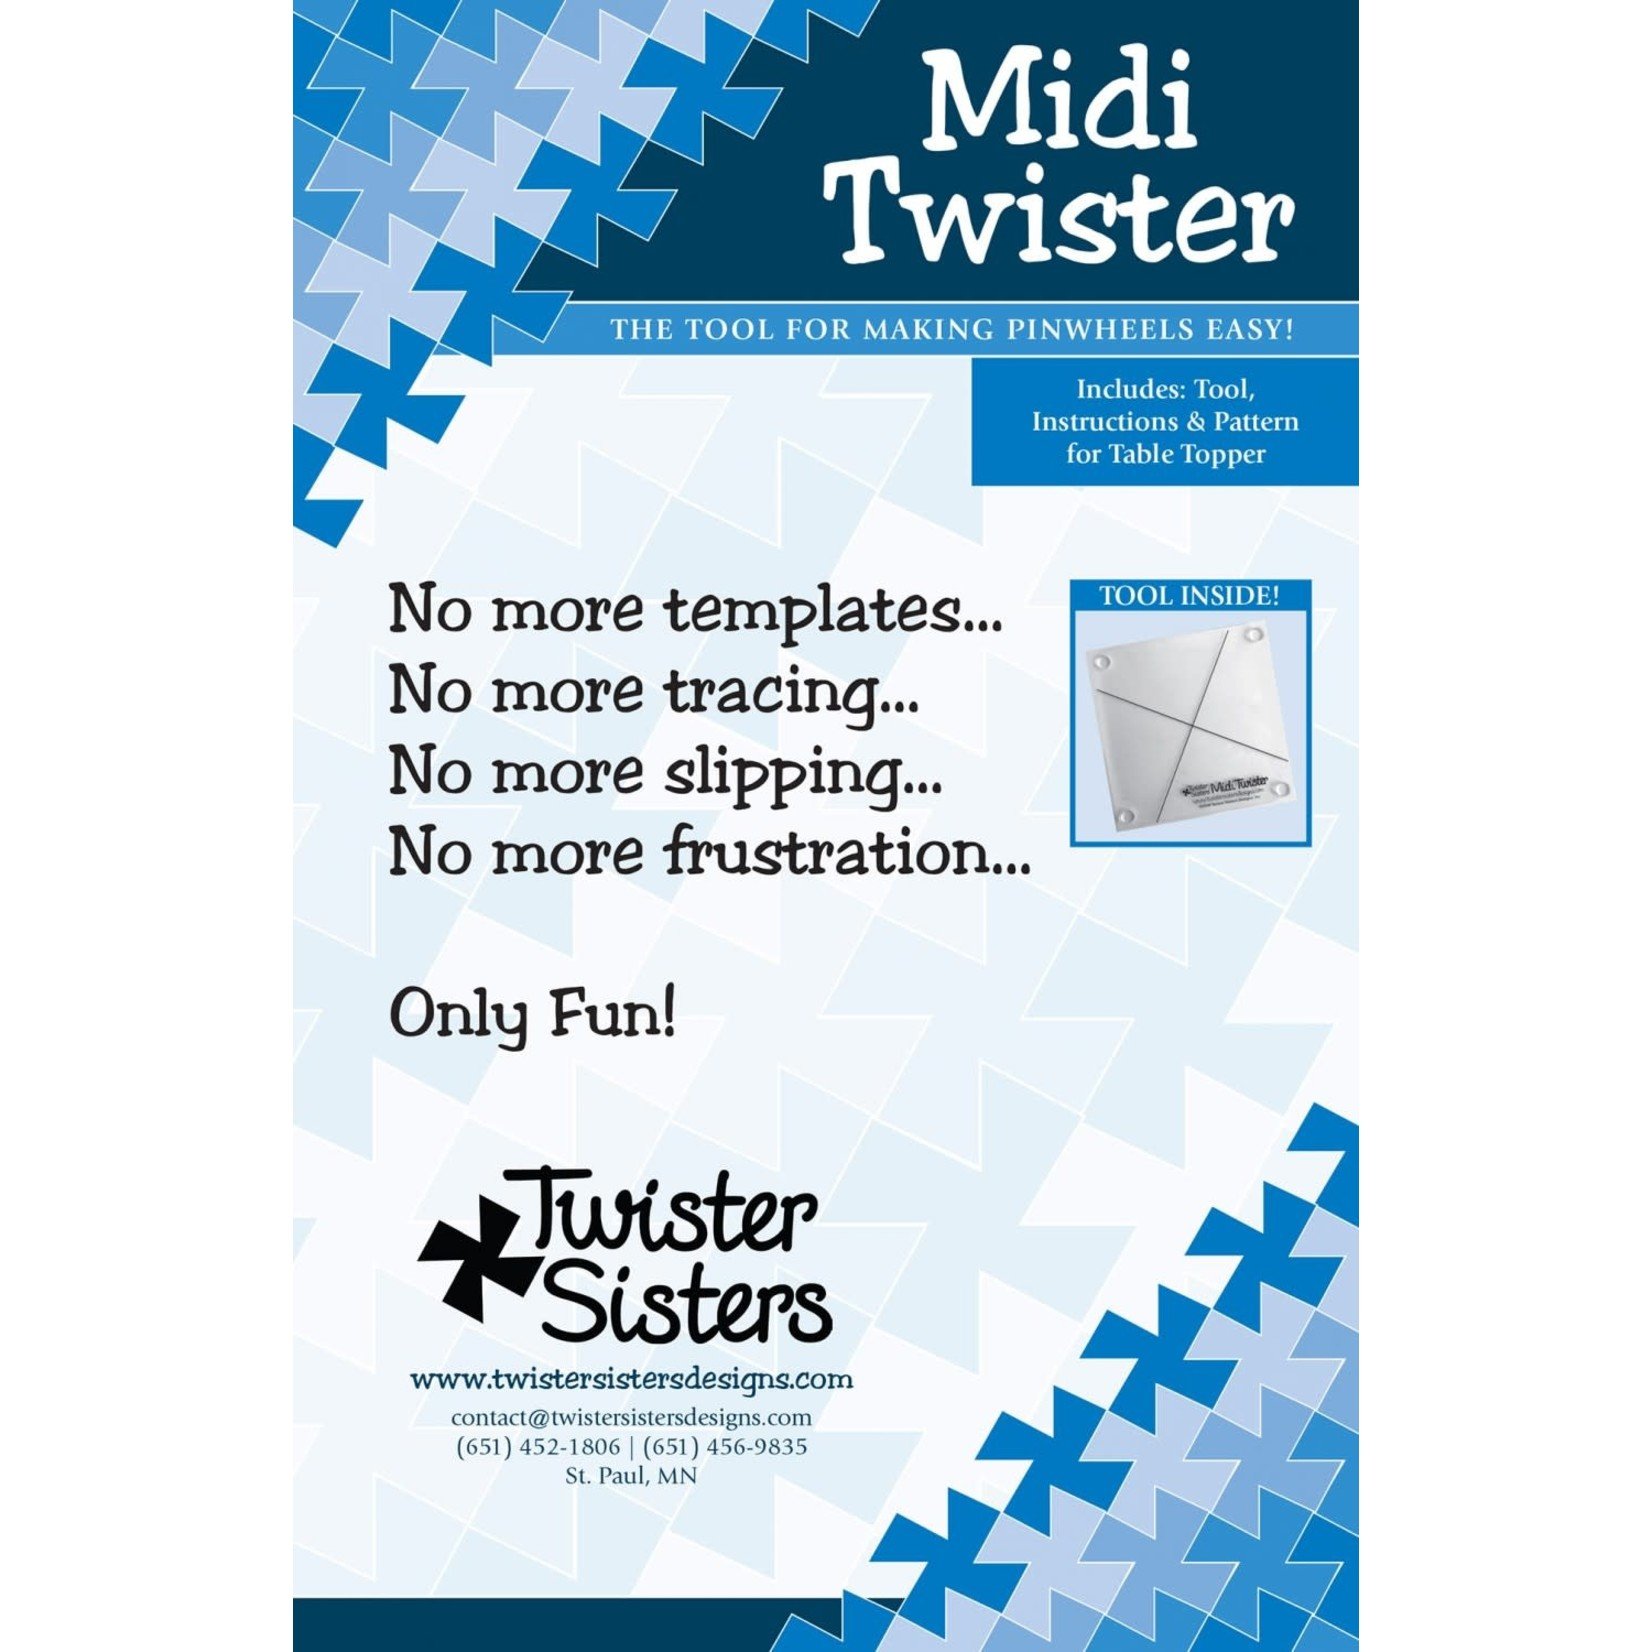 Twister Sisters Midi Twister Pinwheel Template